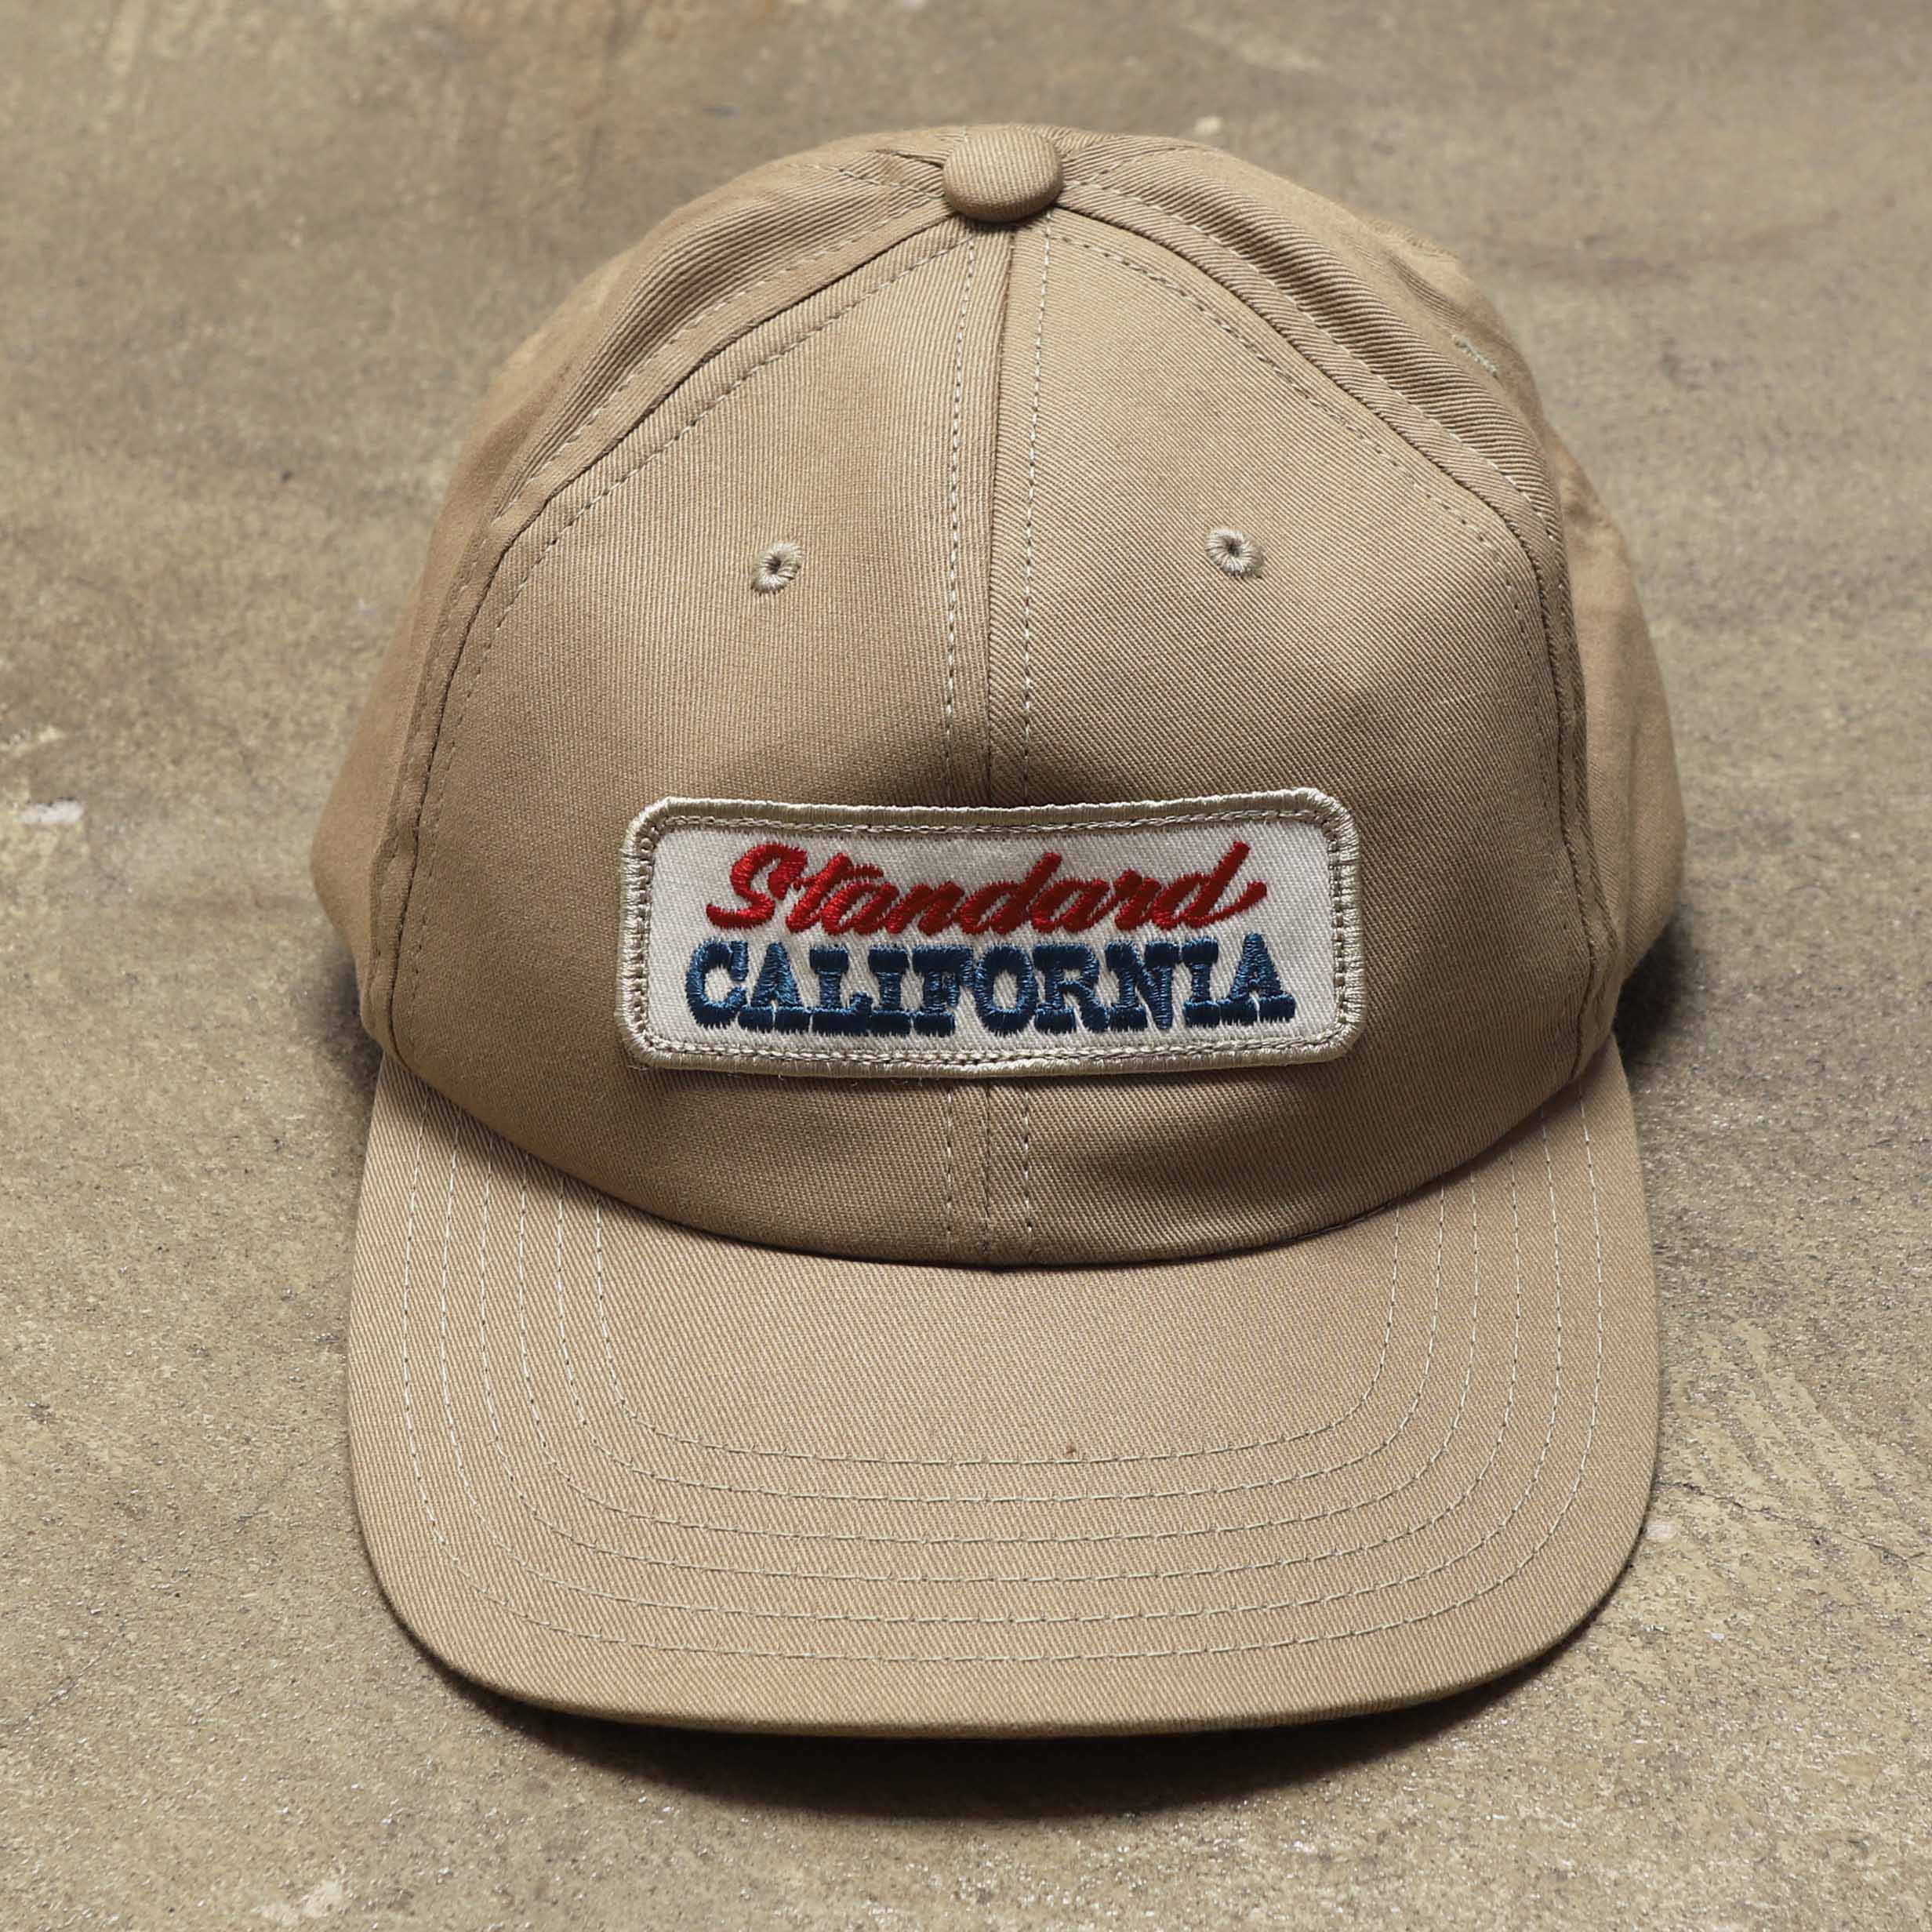 STANDARD CALIFORNIA LOGO CAP - BEIGE